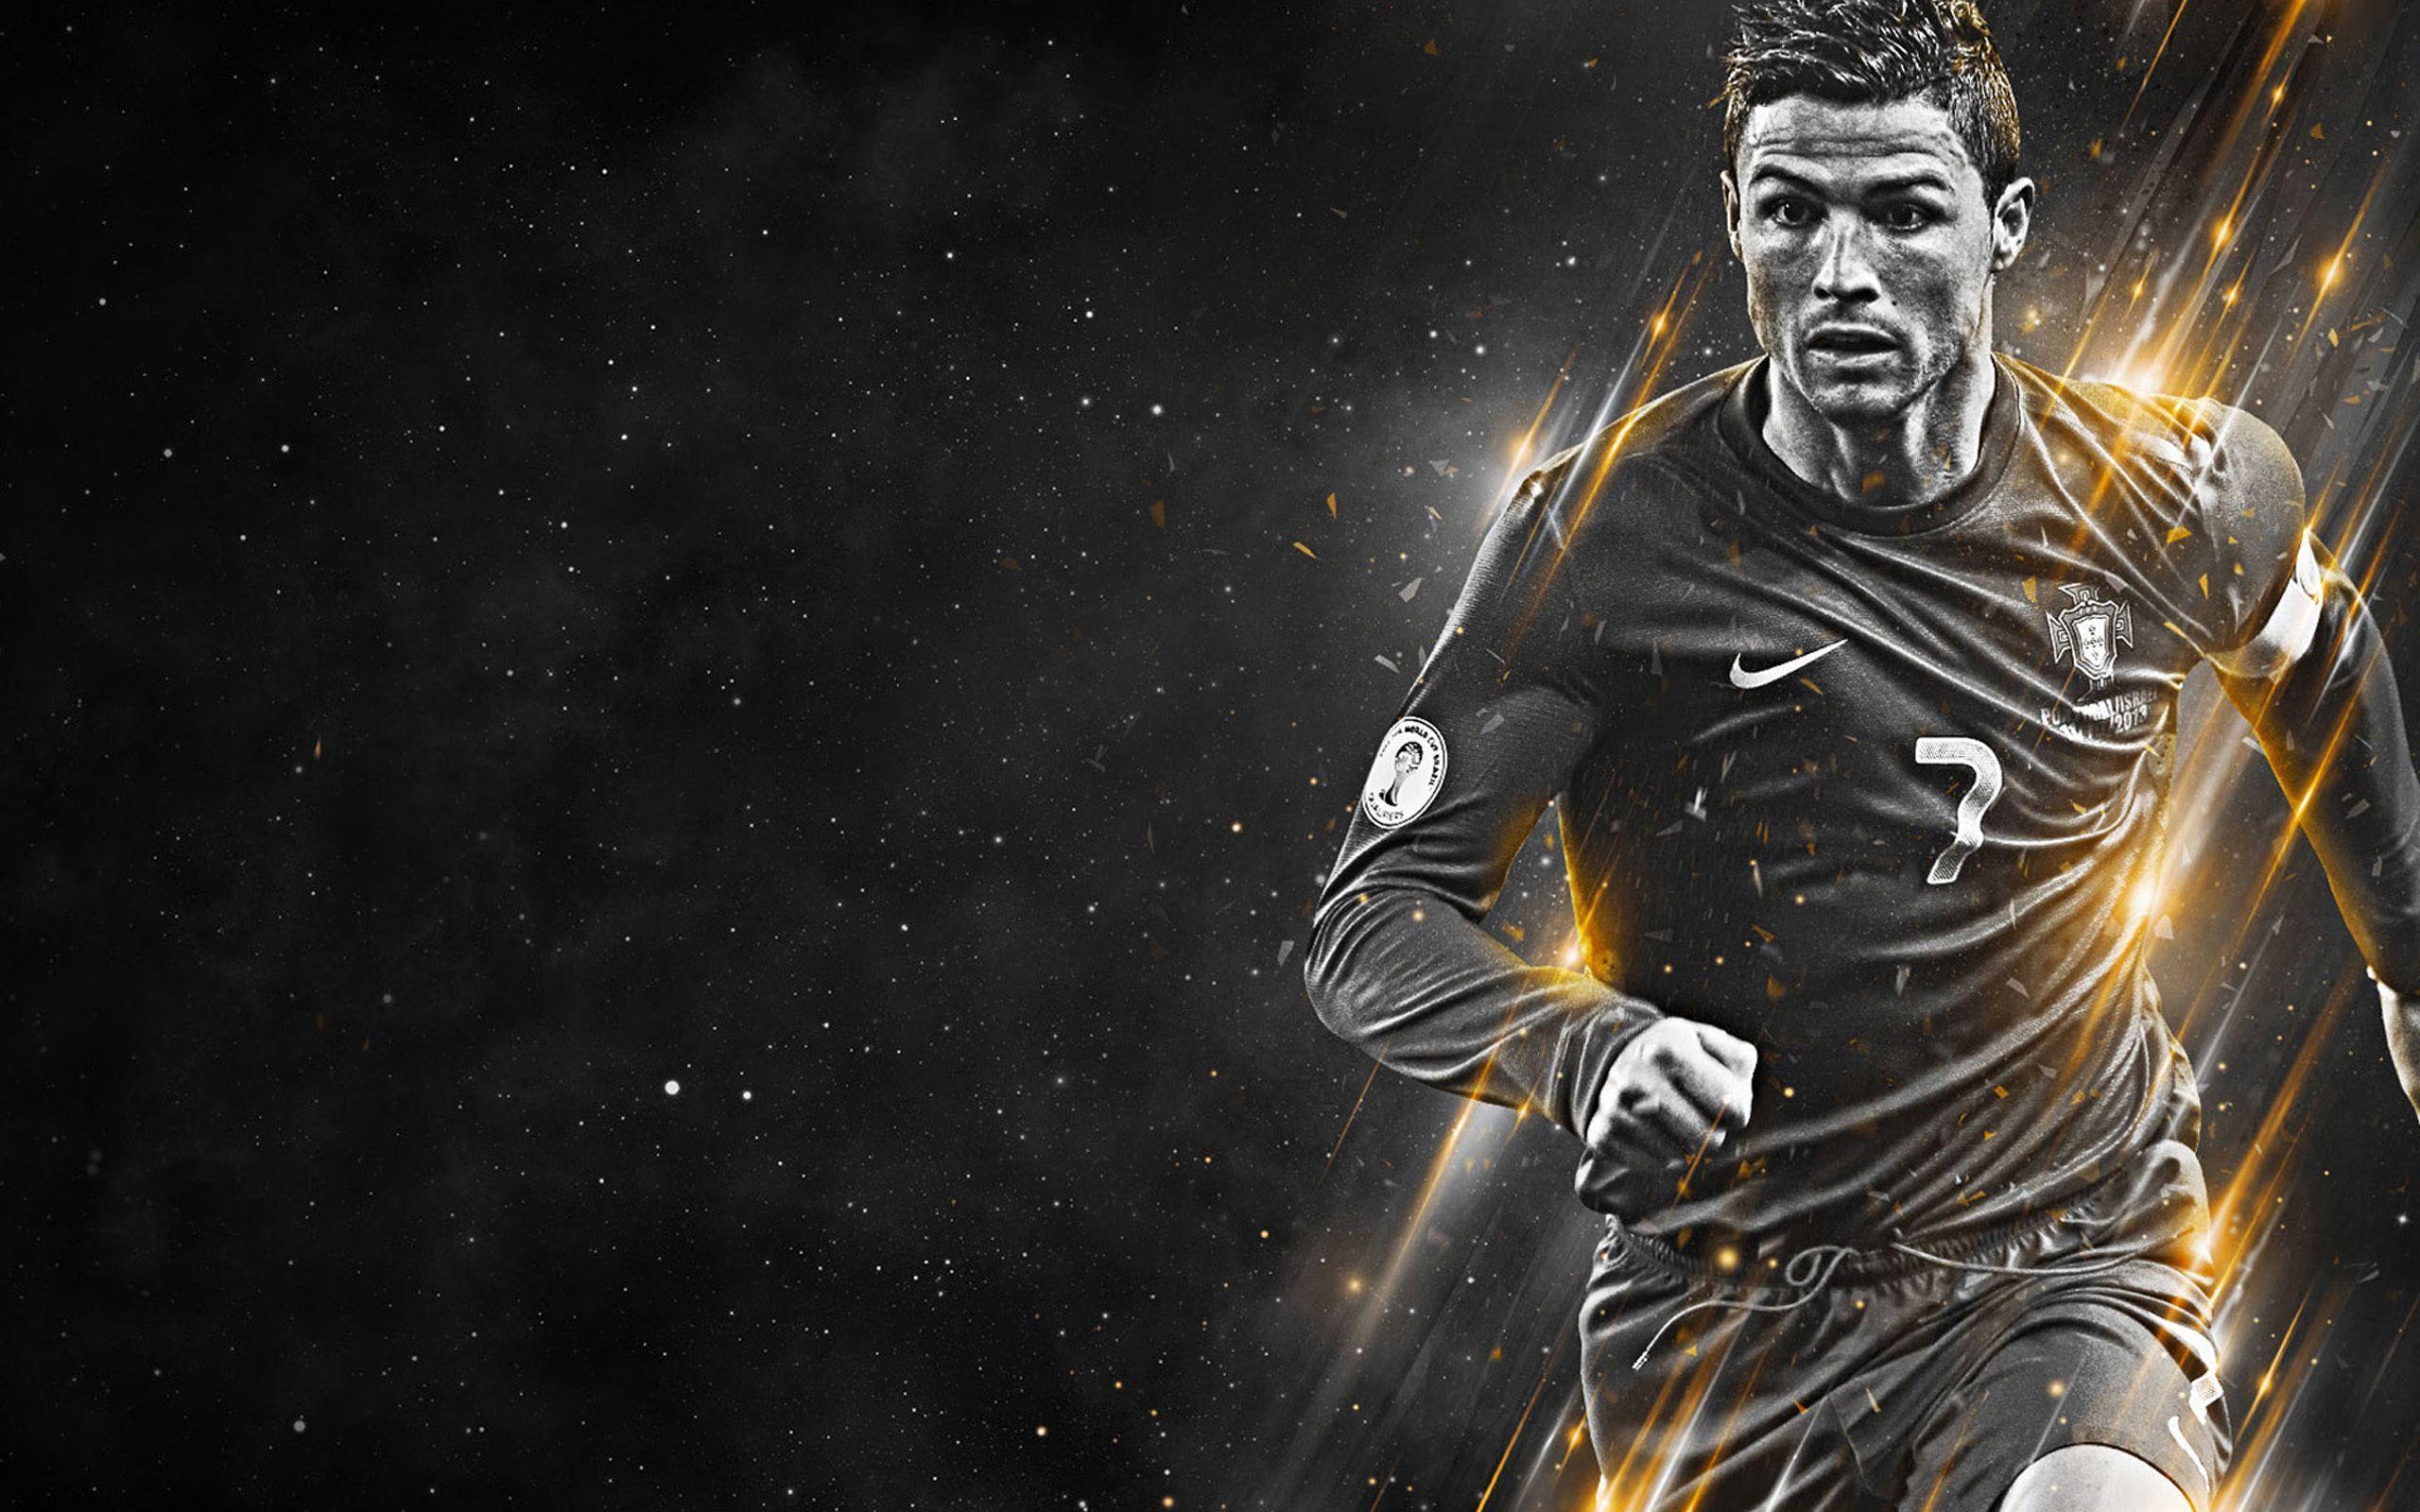 Cristiano Ronaldo HD Wallpaper and Background Image